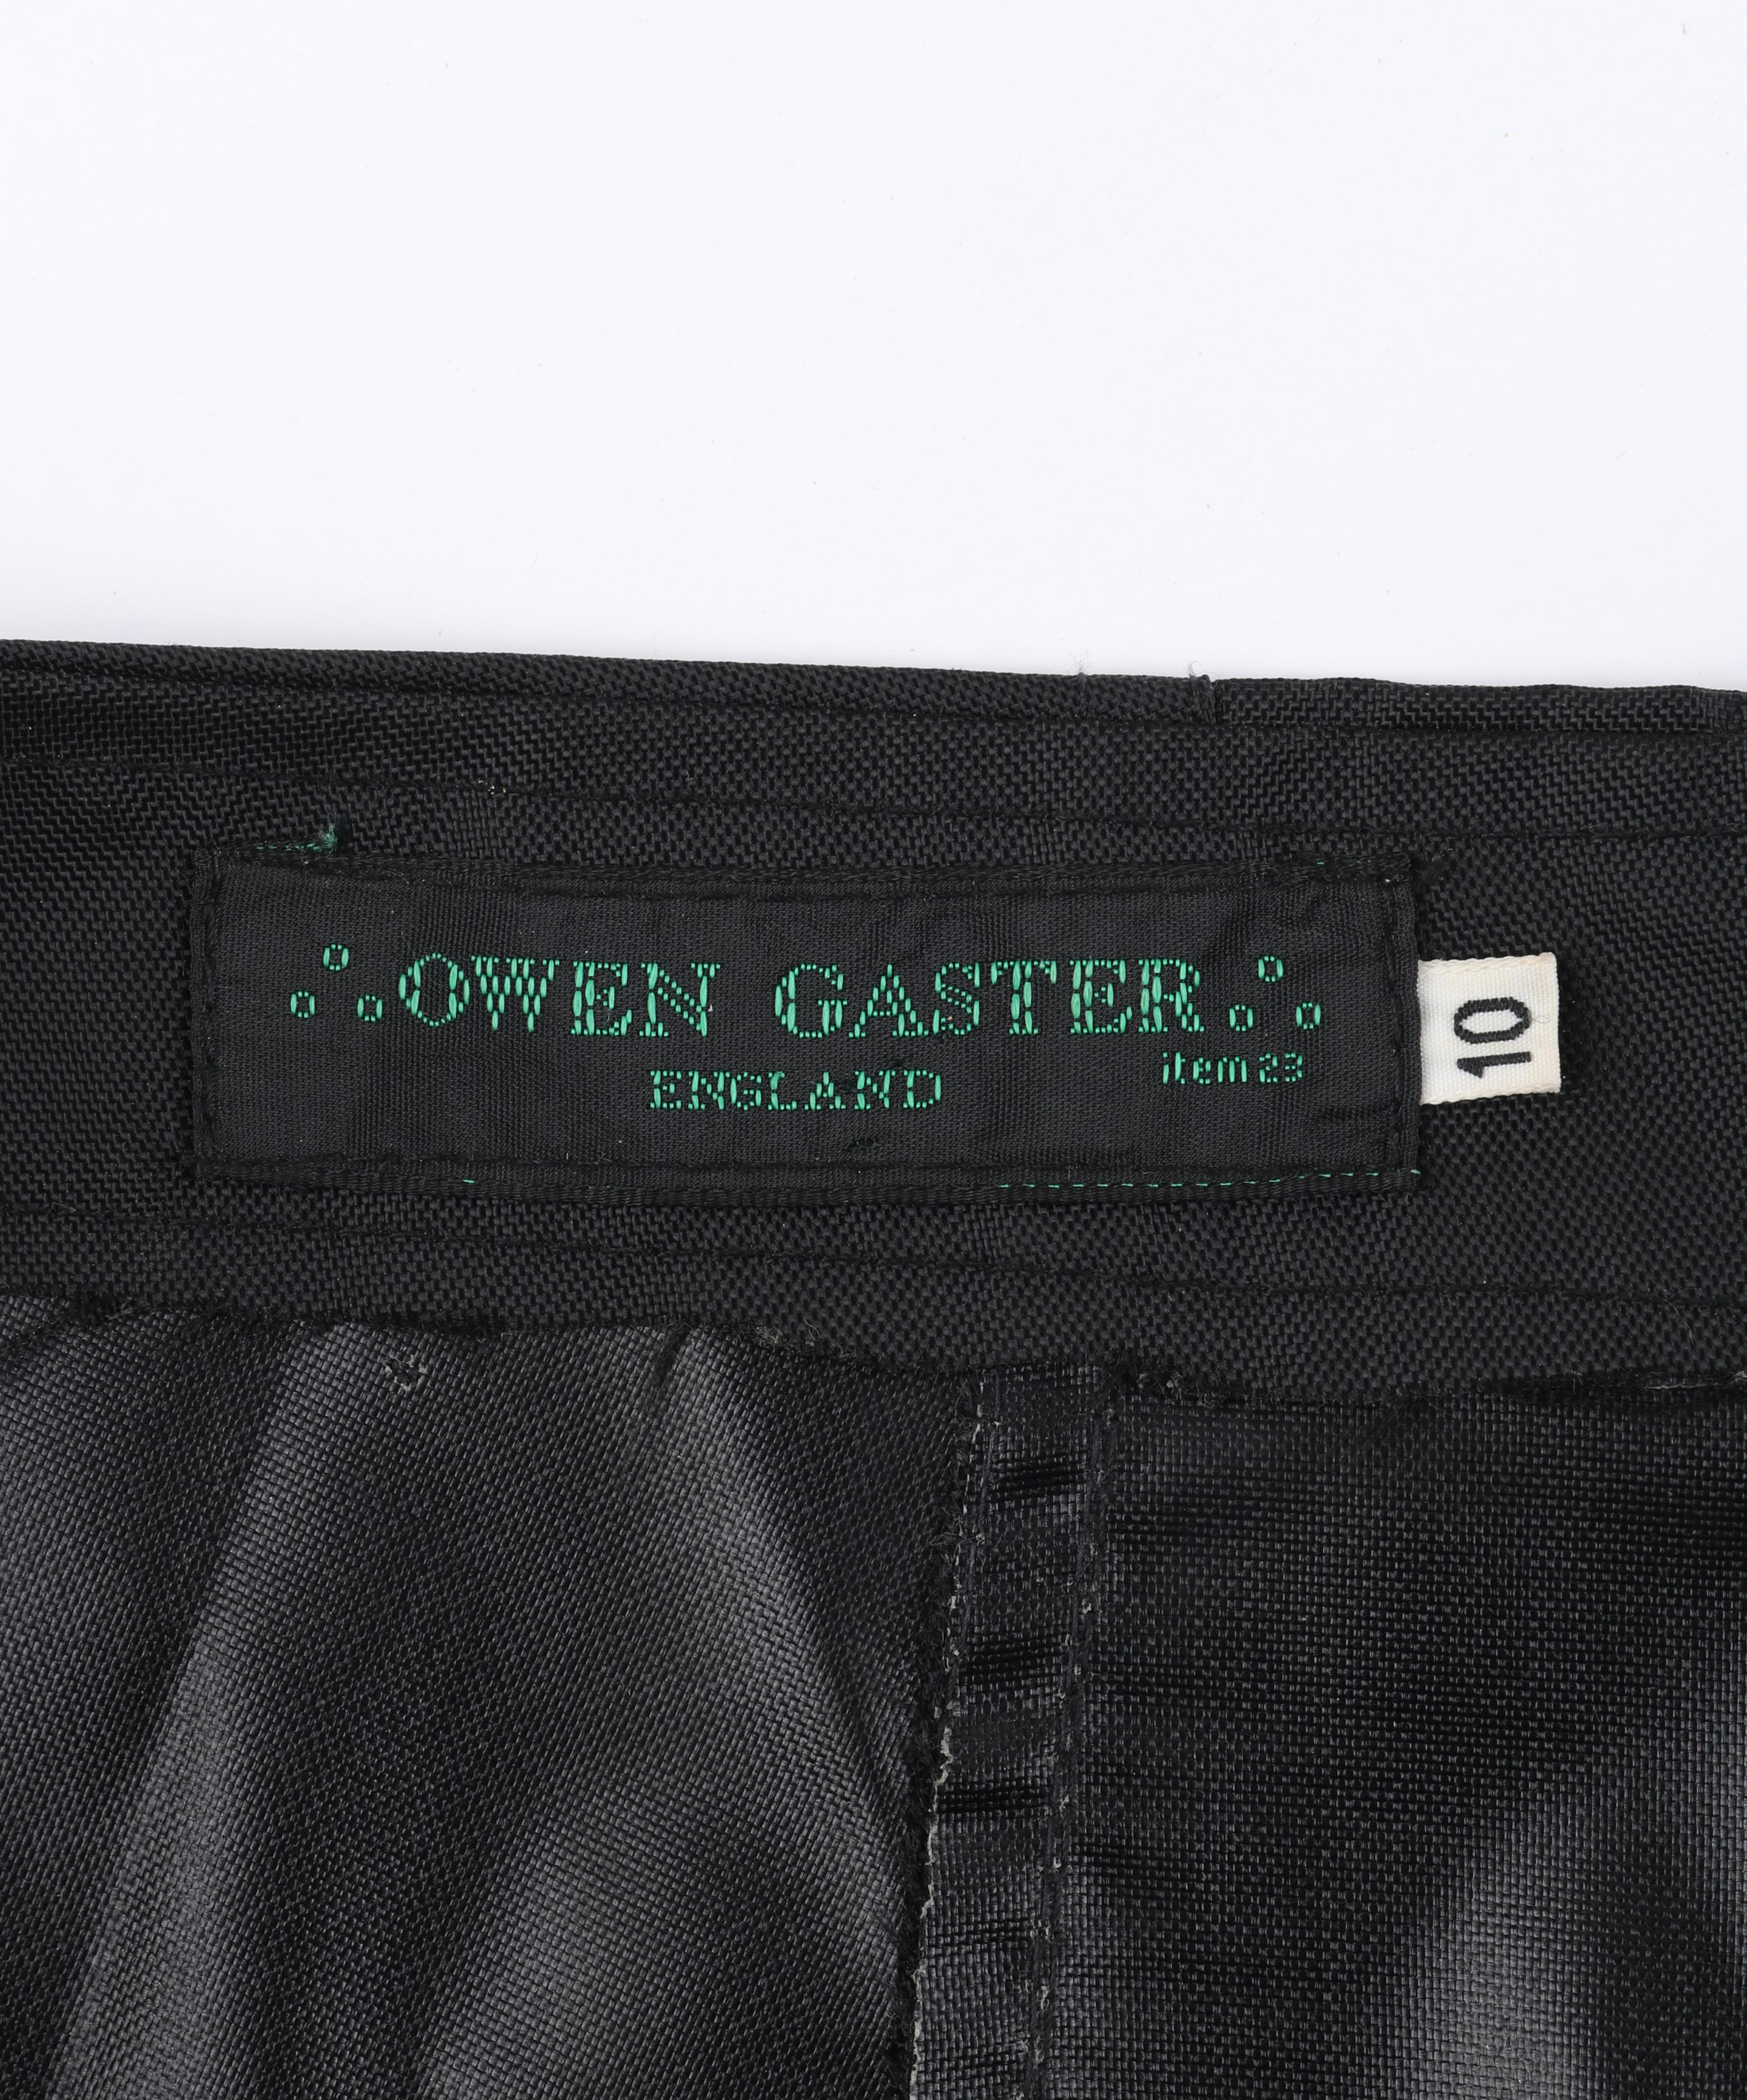 OWEN GASTER c.1996 “Grasshopper” Black Cropped Structured Knicker Trouser Pants For Sale 3